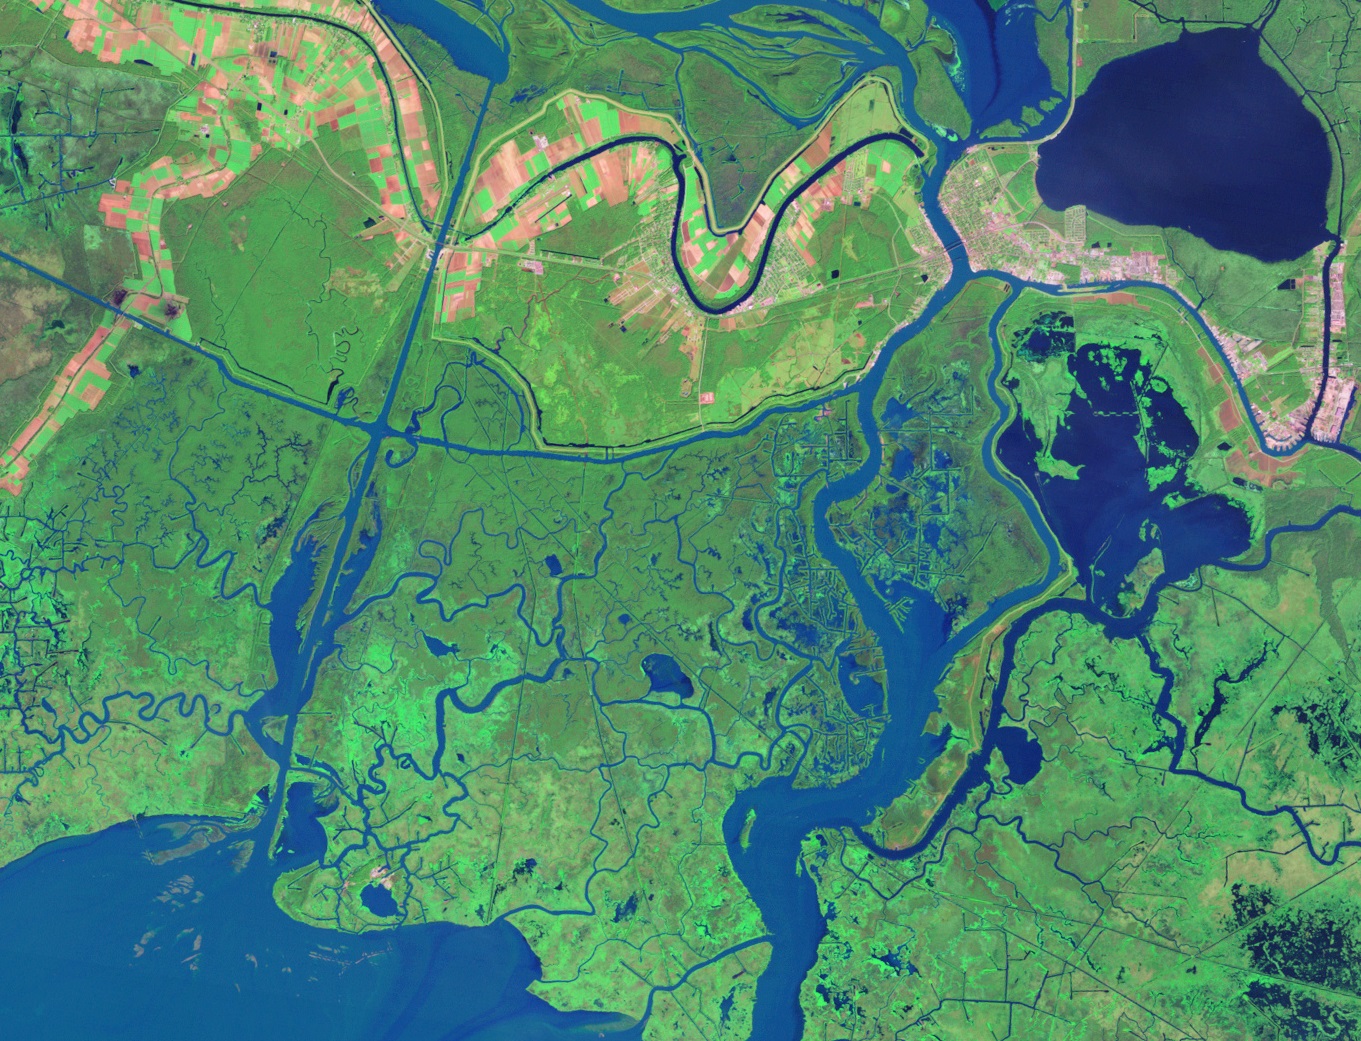 Satellite image of the Mississippi River Delta